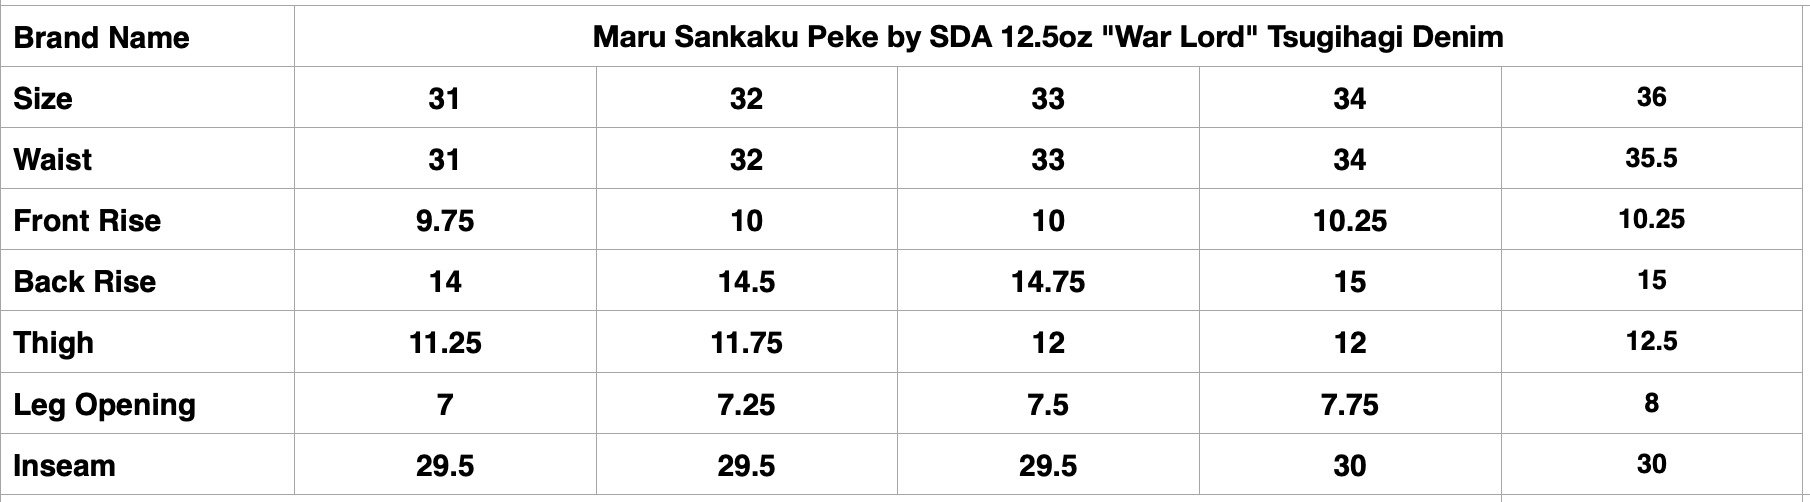 Maru Sankaku Peke by SDA 12.5oz "War Lord" Tsugihagi Denim (Slim Tapered fit)